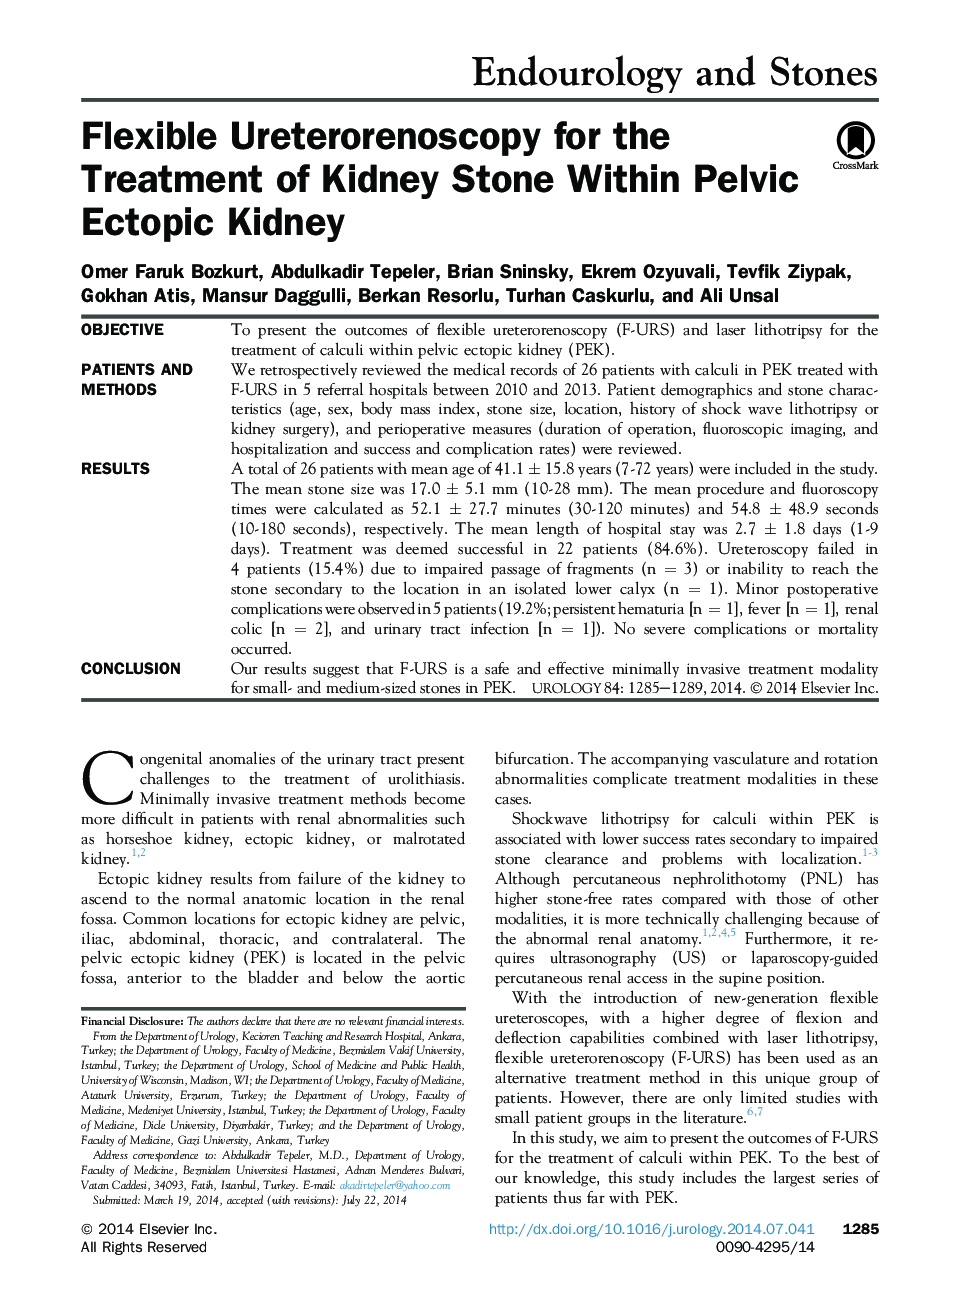 Flexible Ureterorenoscopy for the Treatment of Kidney Stone Within Pelvic Ectopic Kidney 